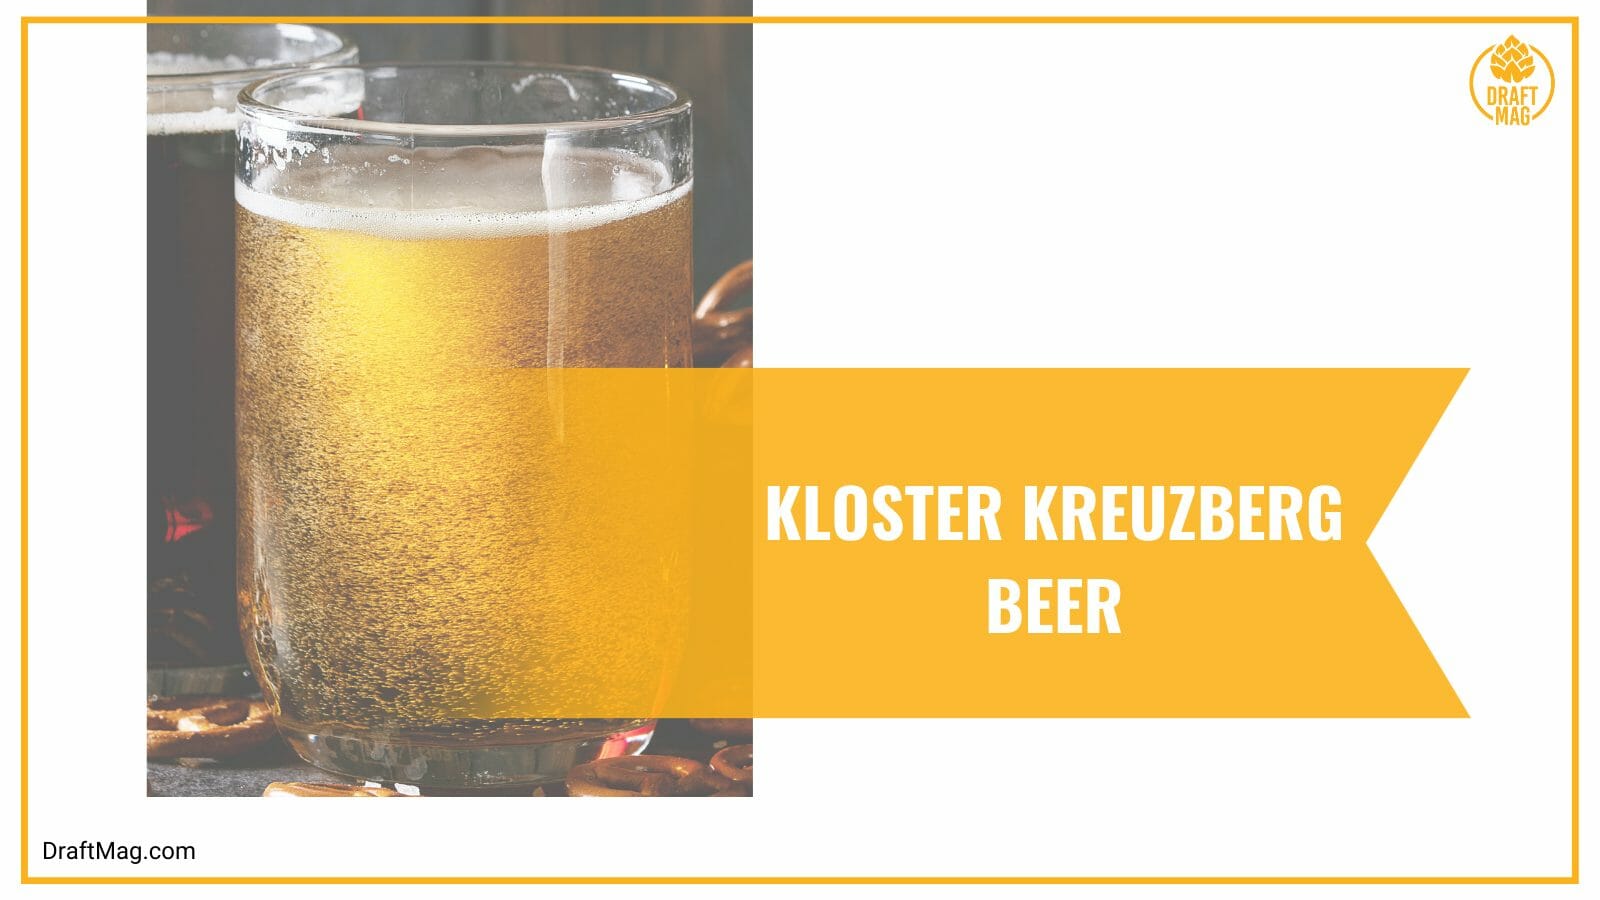 Kreuzberg beer with a creamy head